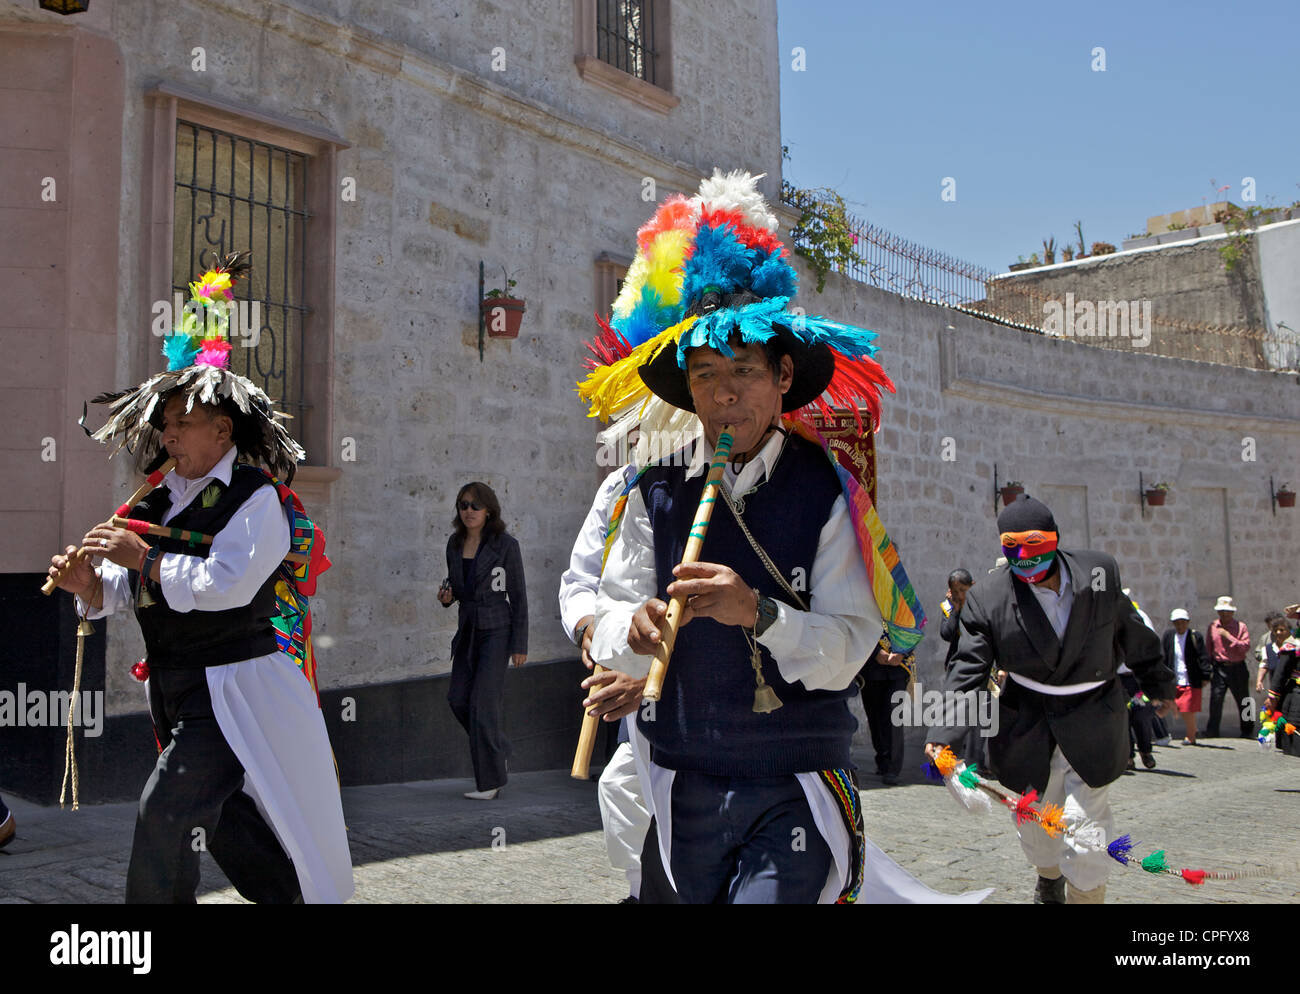 Wedding procession with traditionally dressed Peruvians, Arequipa, Peru Stock Photo